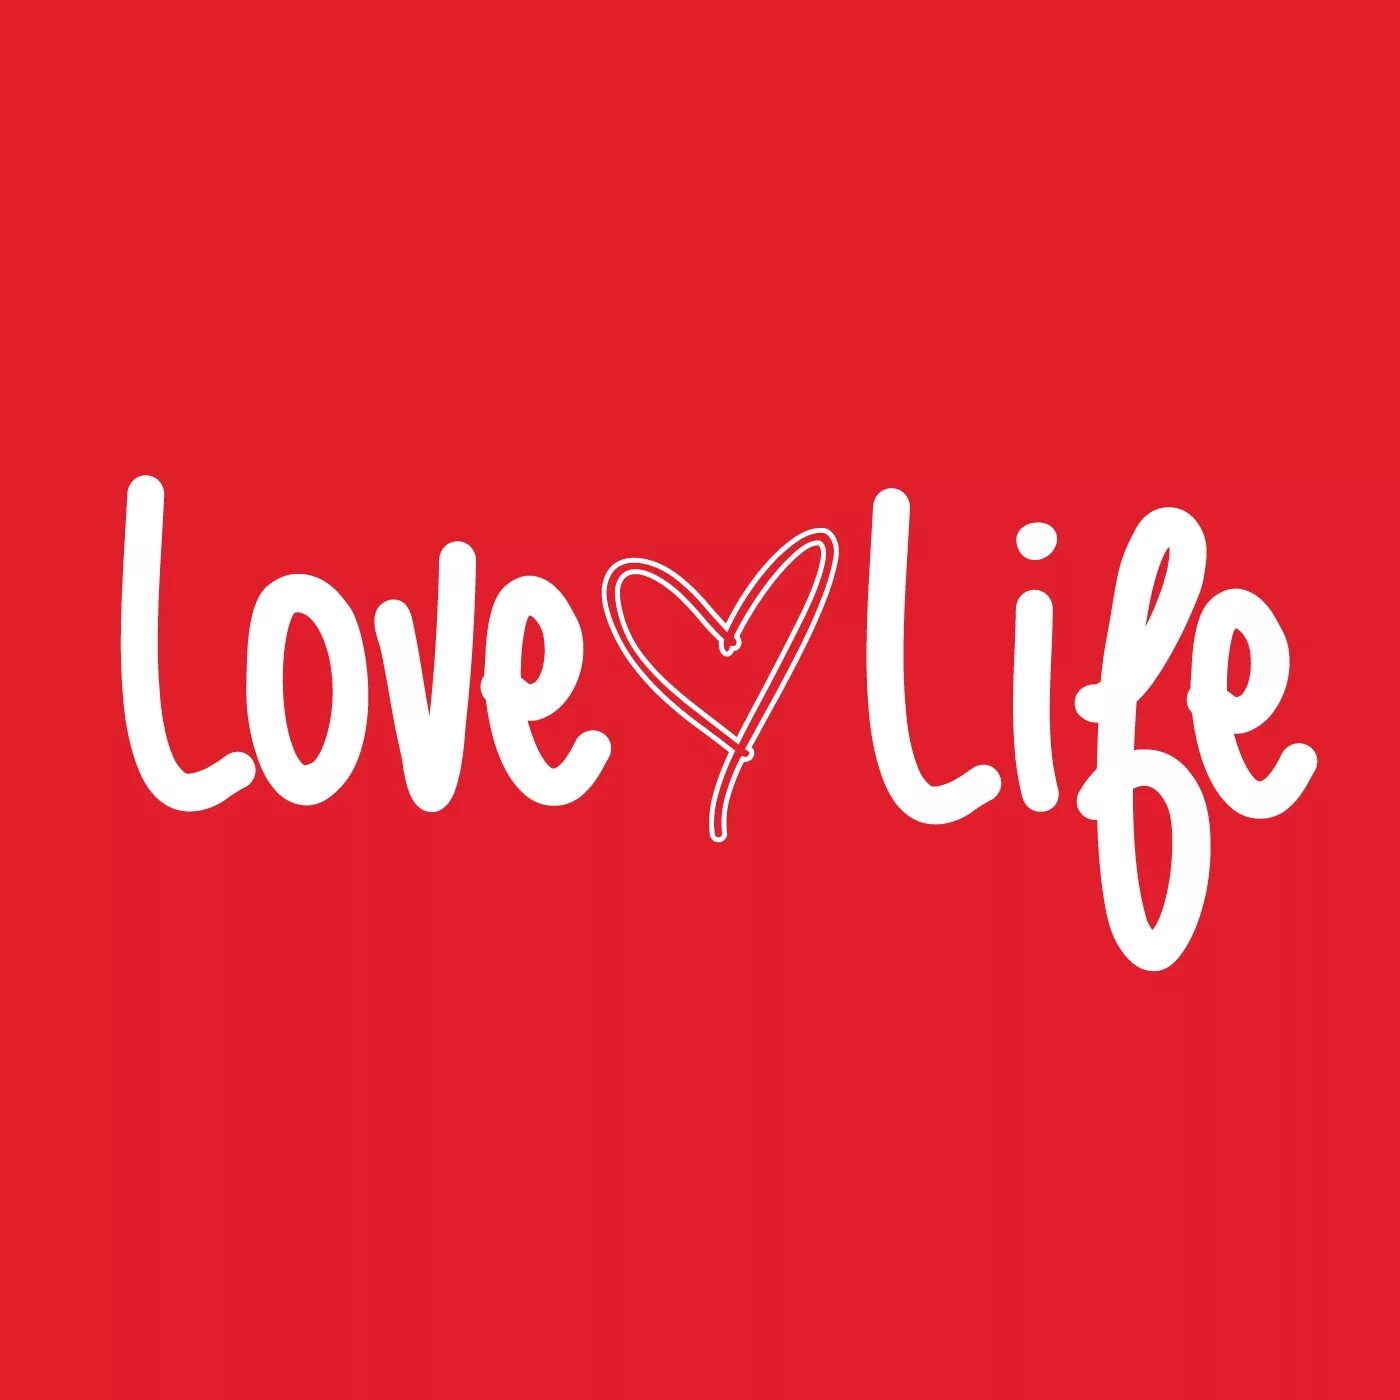 Love Life. Любимая Life. Love Life 2021. Life is Love компания.